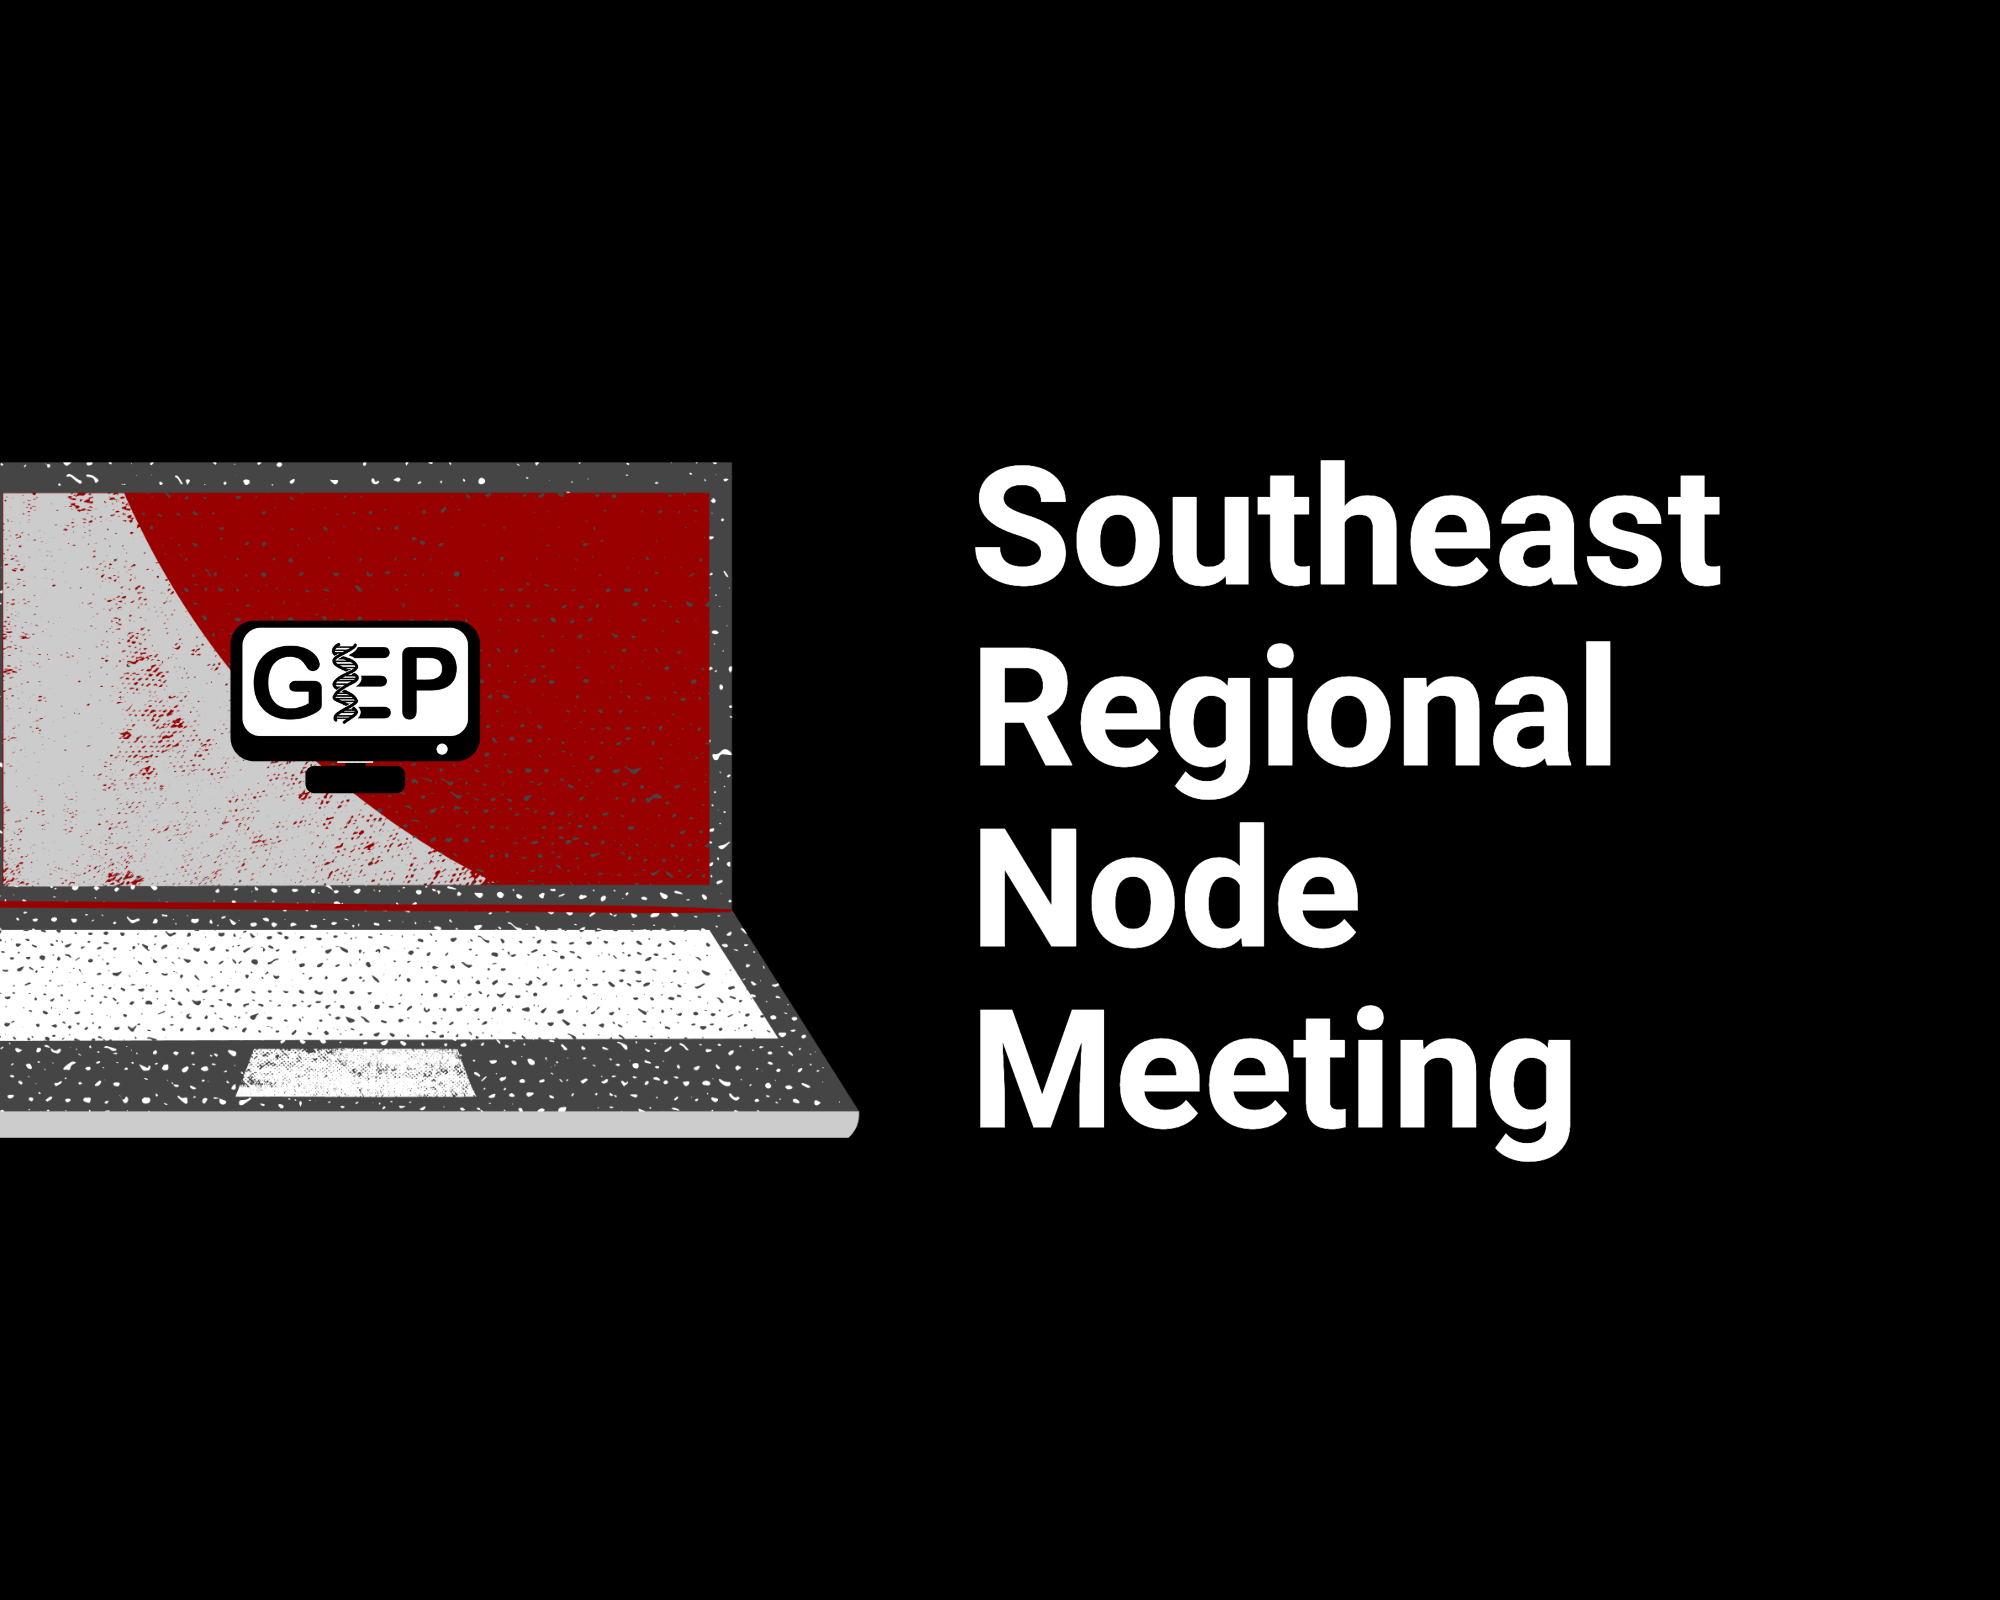 GEP Southeast Regional Node Meeting virtual via laptop computer